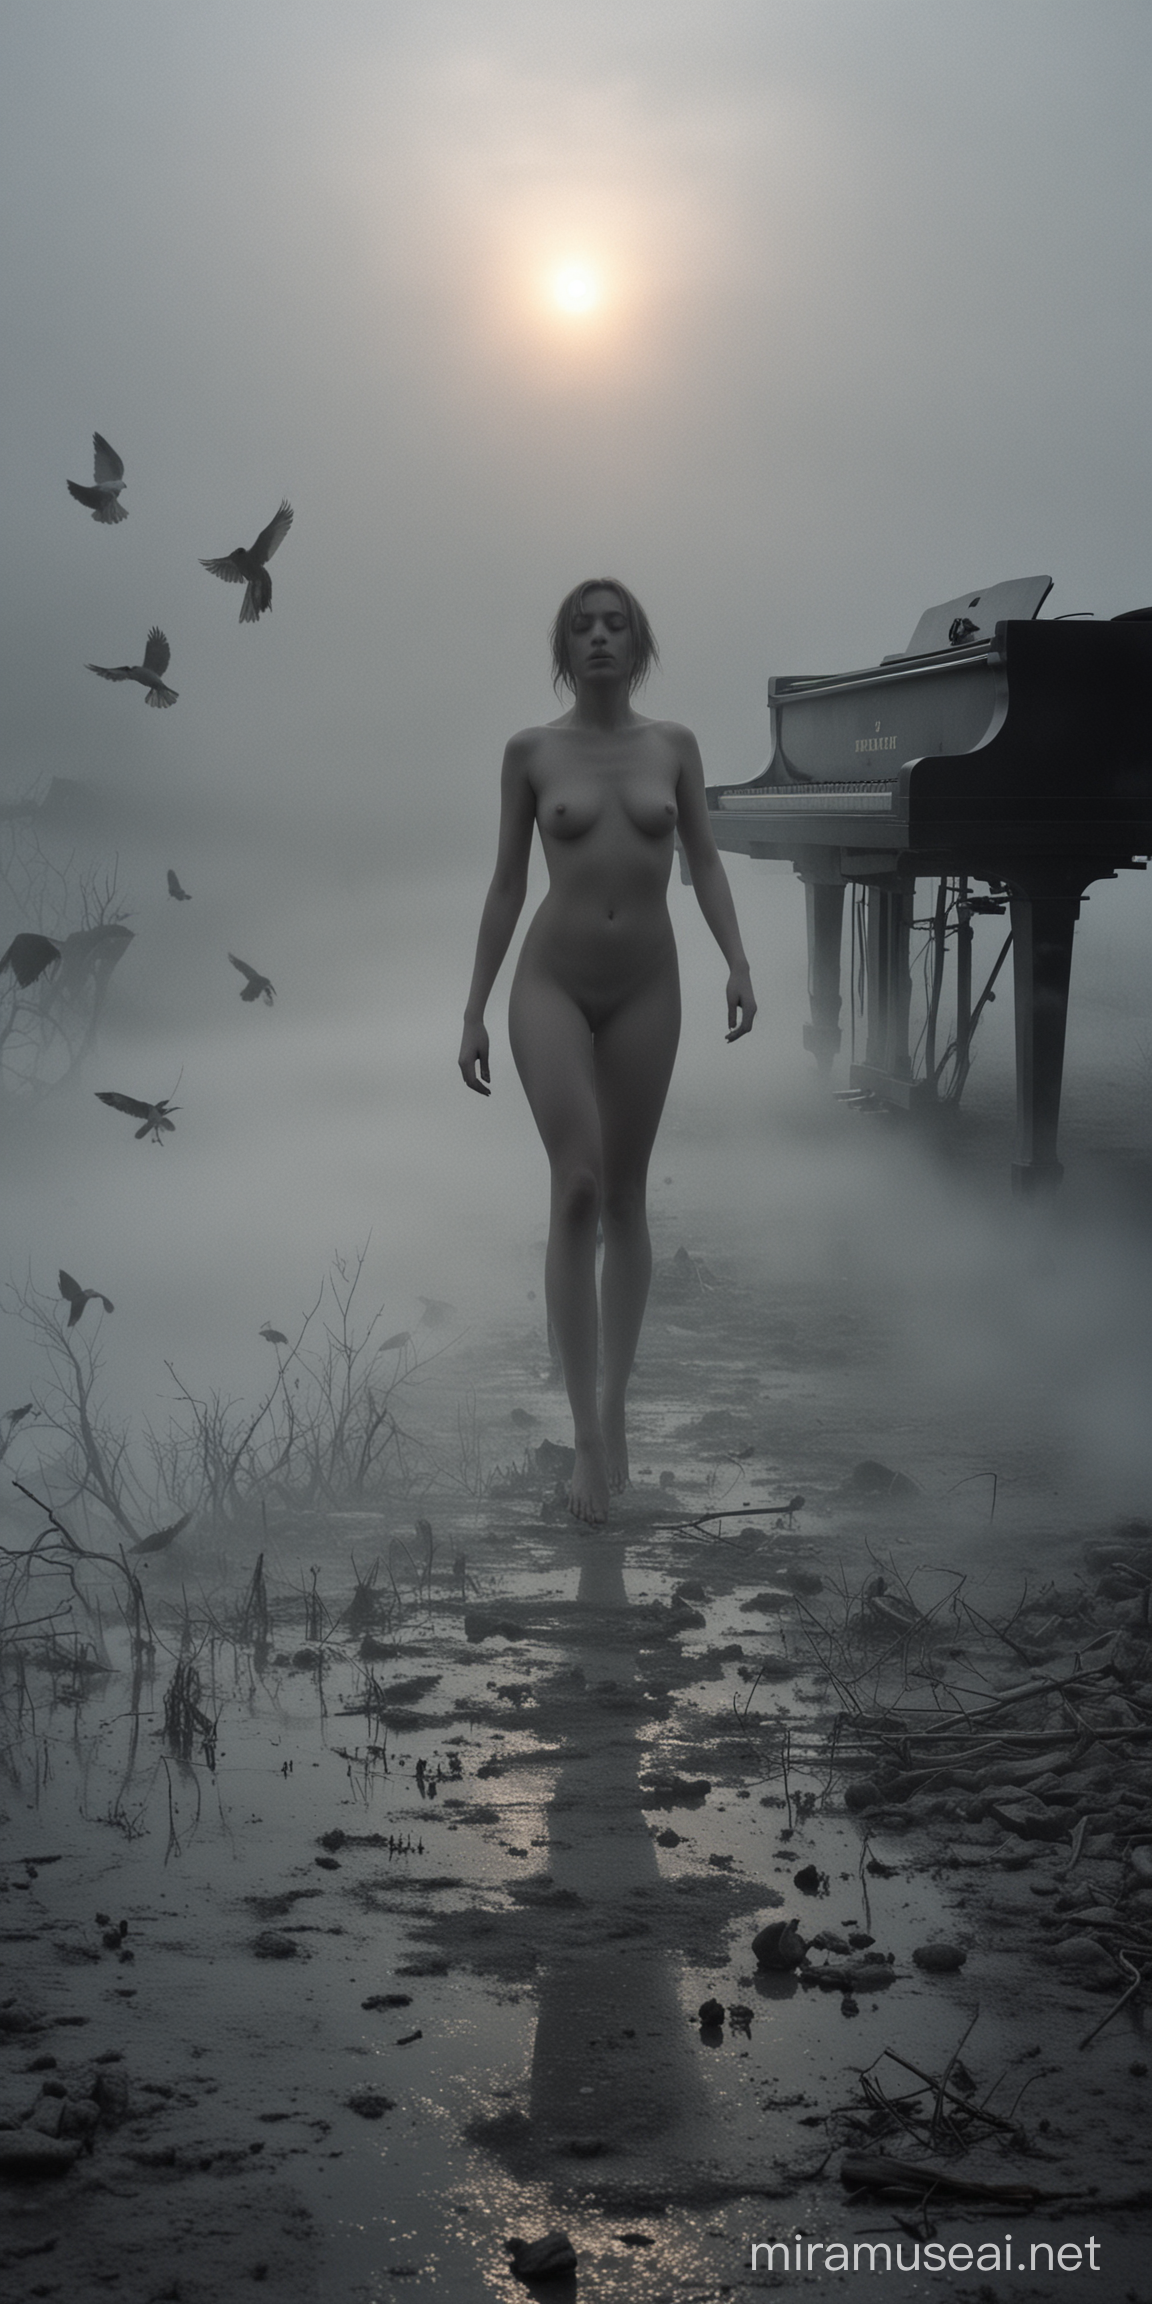 experimental cinematography, MUJER DESNUDA,dystopian realism, made of mist, expansive skies, transavanguardia, movie still, very foggy, lost places, transylvania, birds, fire, piano, girl , nude, sexy